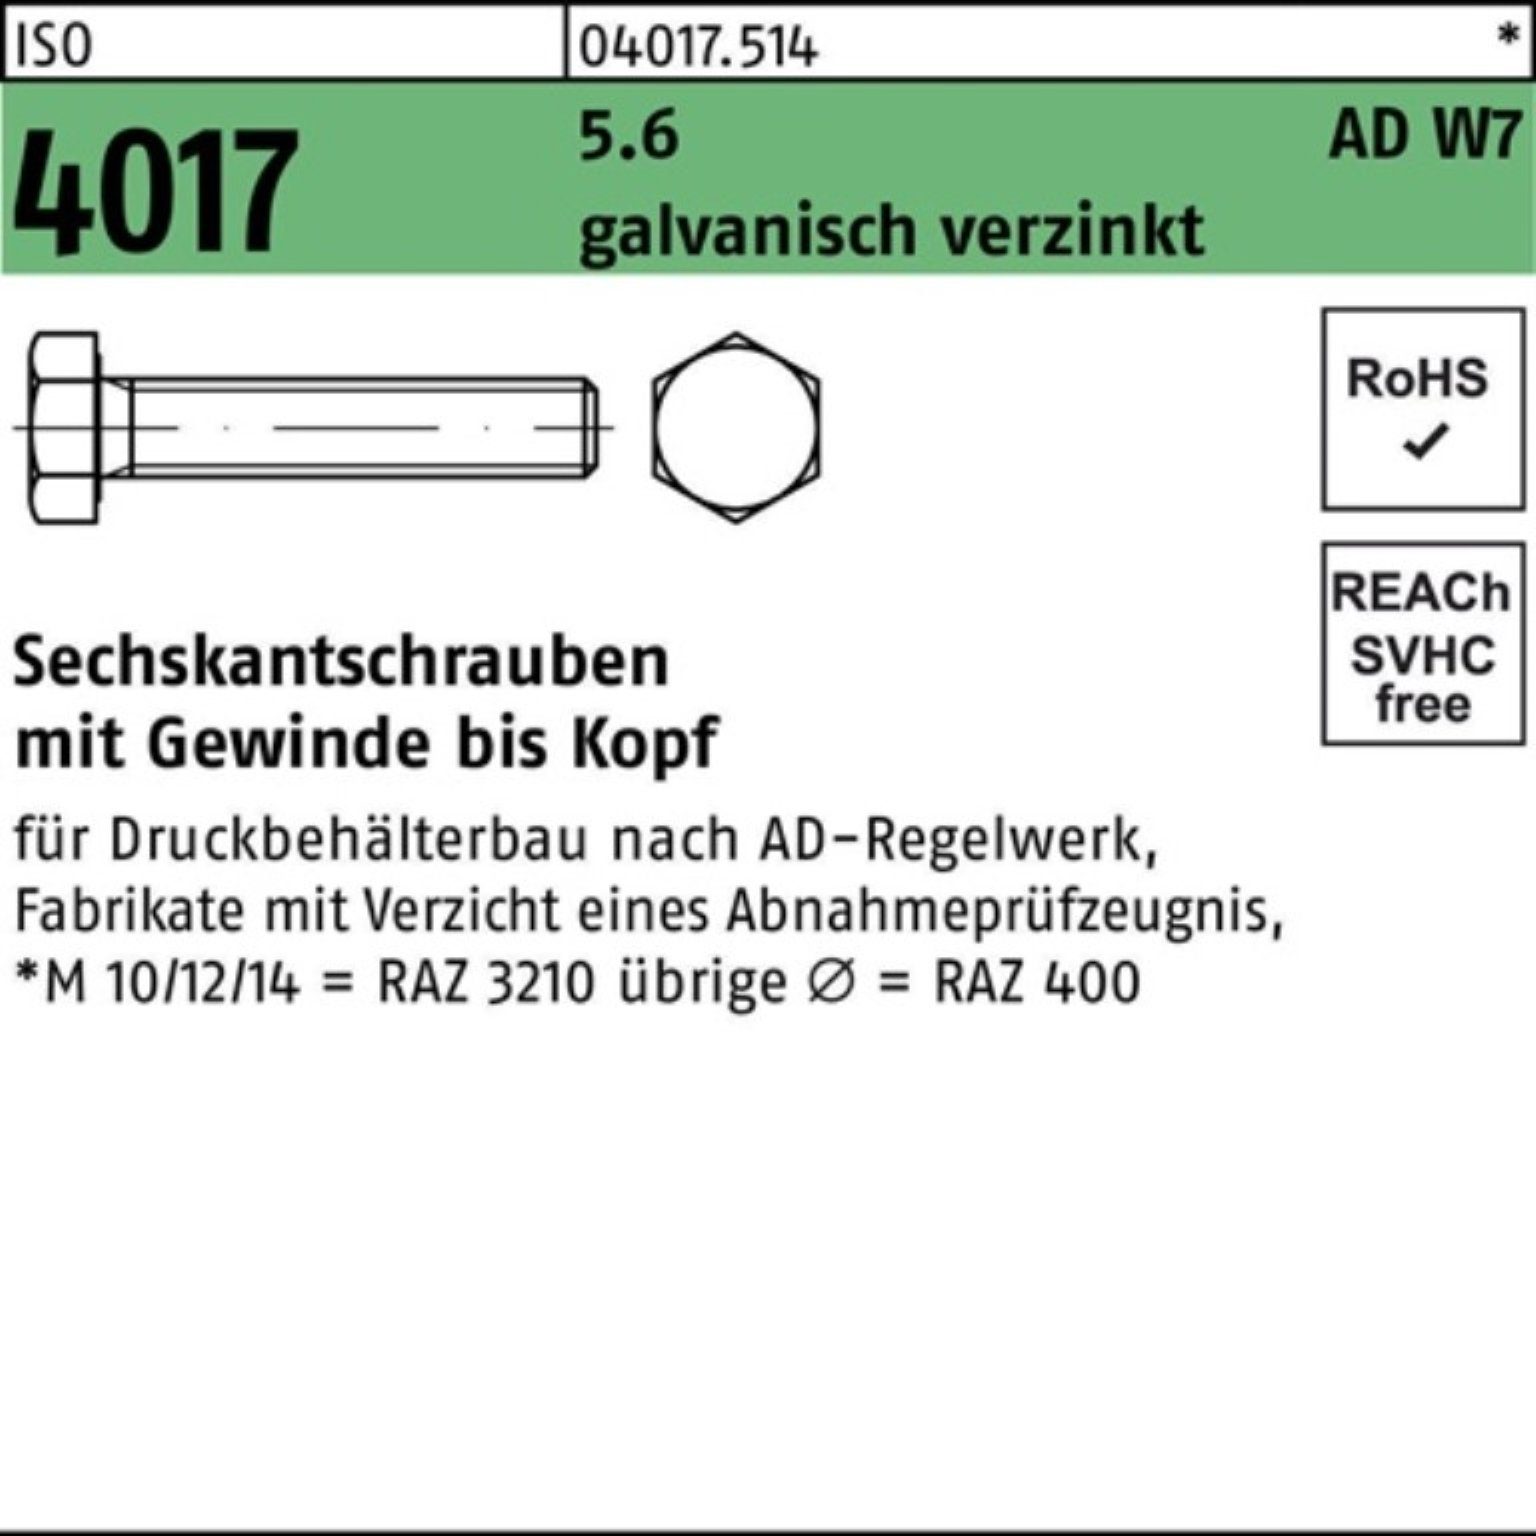 Bufab Sechskantschraube 100er Pack Sechskantschraube 75 5.6 4017 galv.verz. AD W7 ISO M24x VG